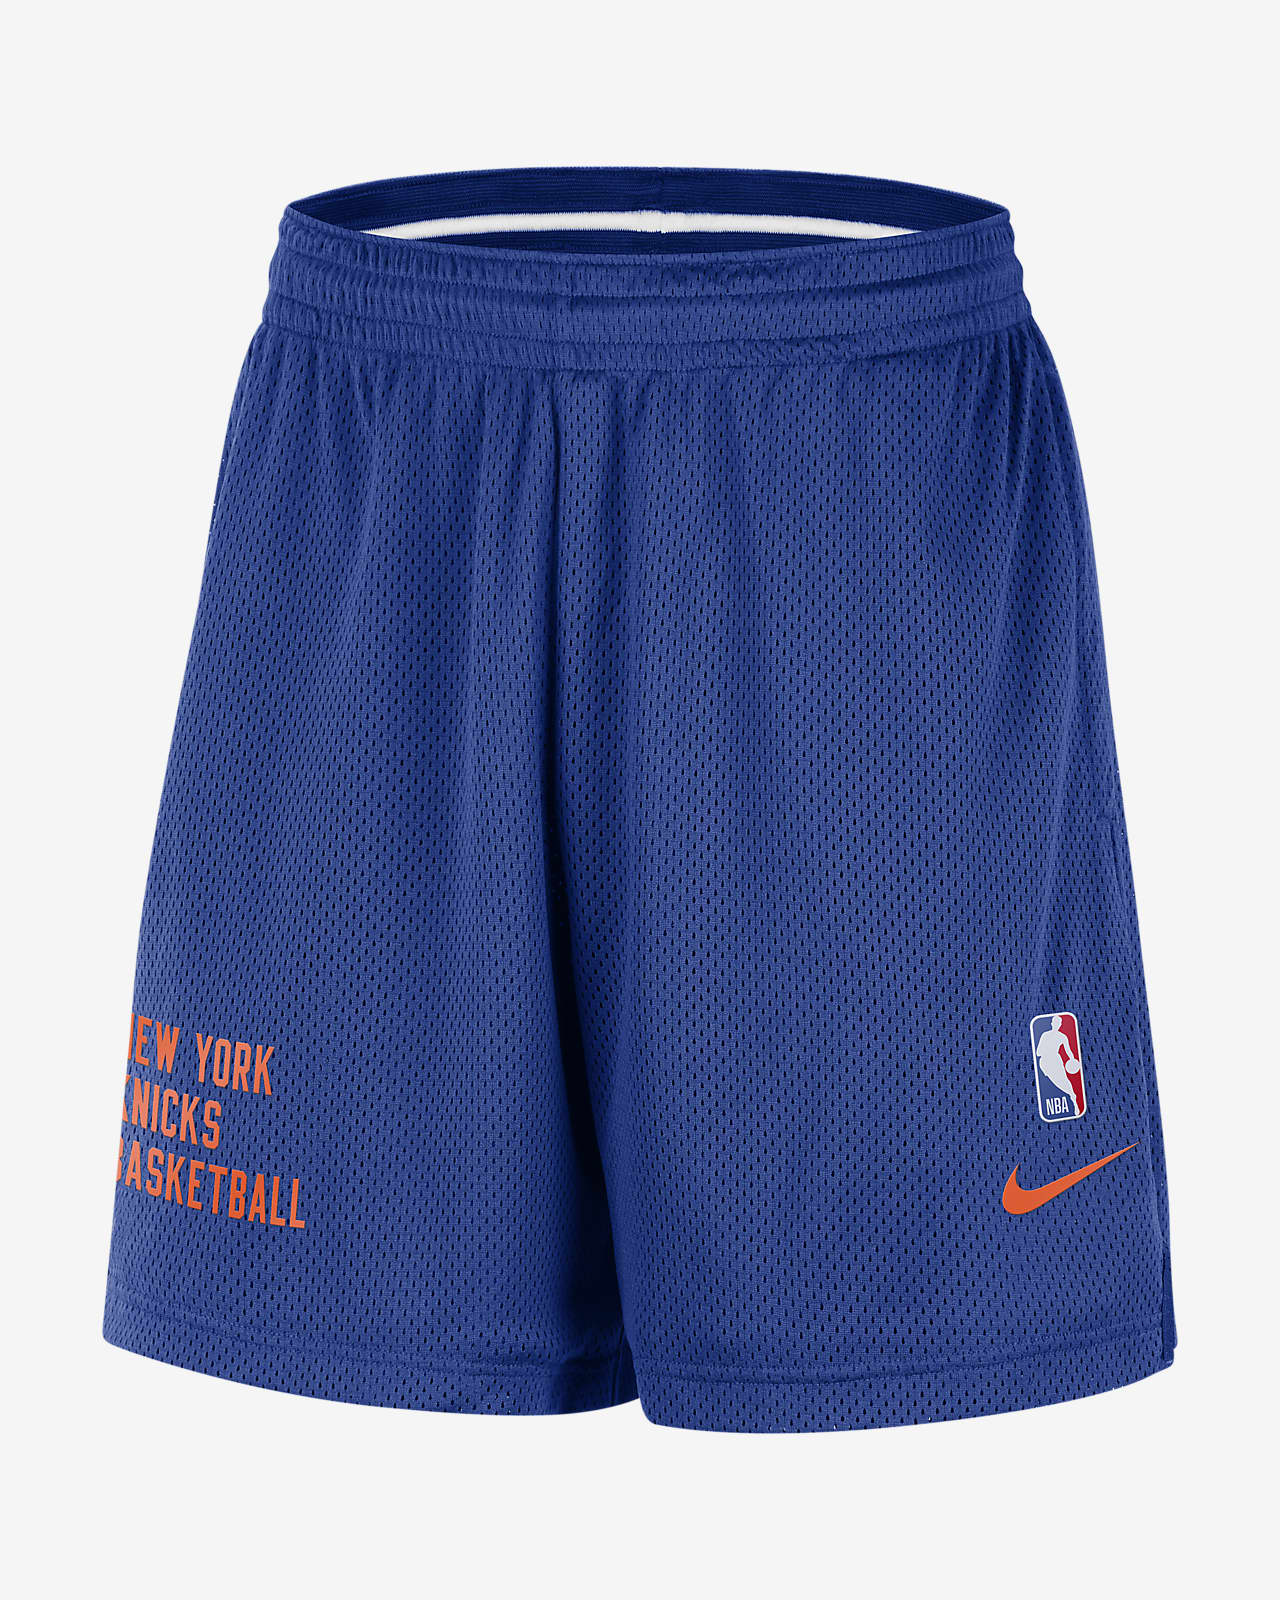 New York Knicks Men's Nike NBA Mesh Shorts